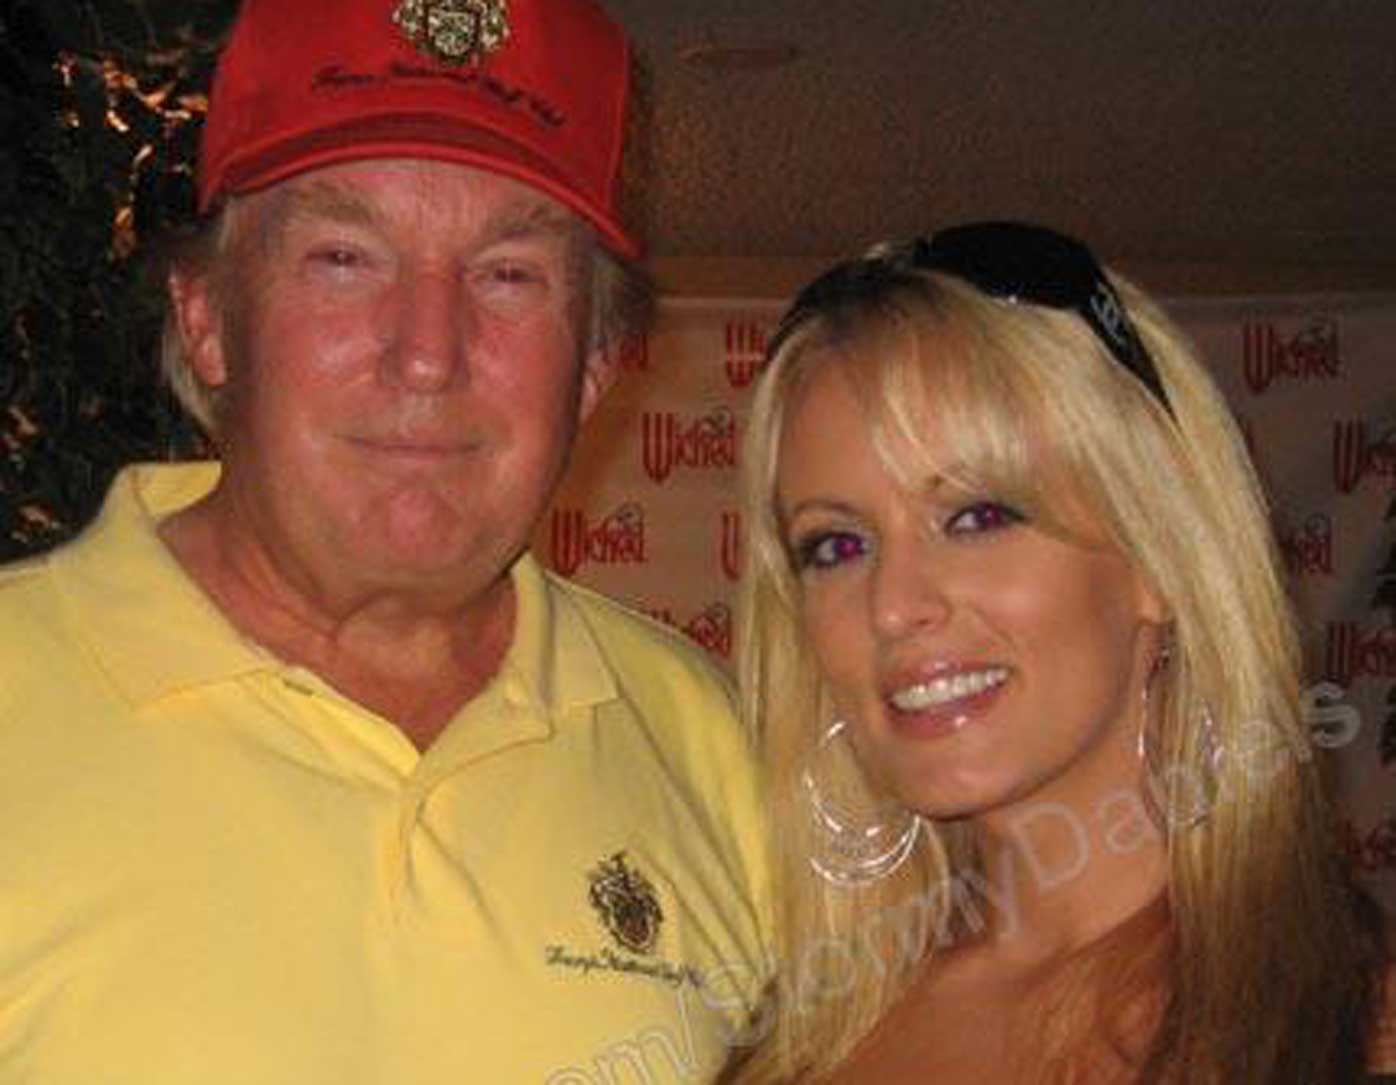 Donald Trump and Stephanie Clifford, aka Stormy Daniels. (Myspace)